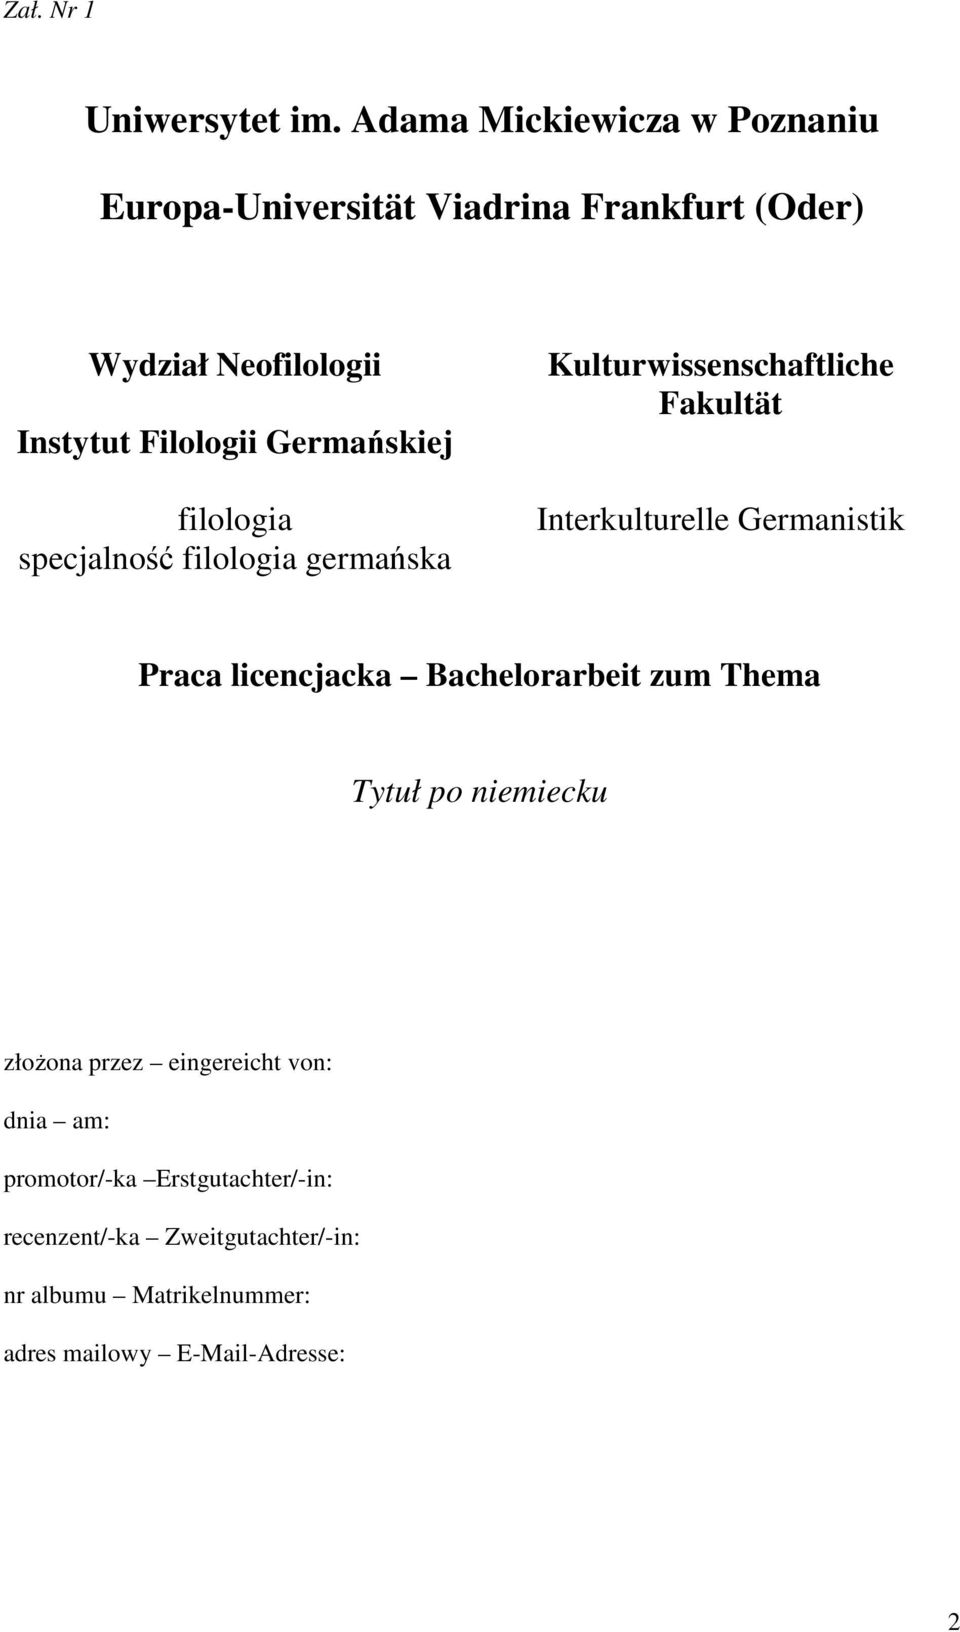 Germańskiej filologia specjalność filologia germańska Kulturwissenschaftliche Fakultät Interkulturelle Germanistik